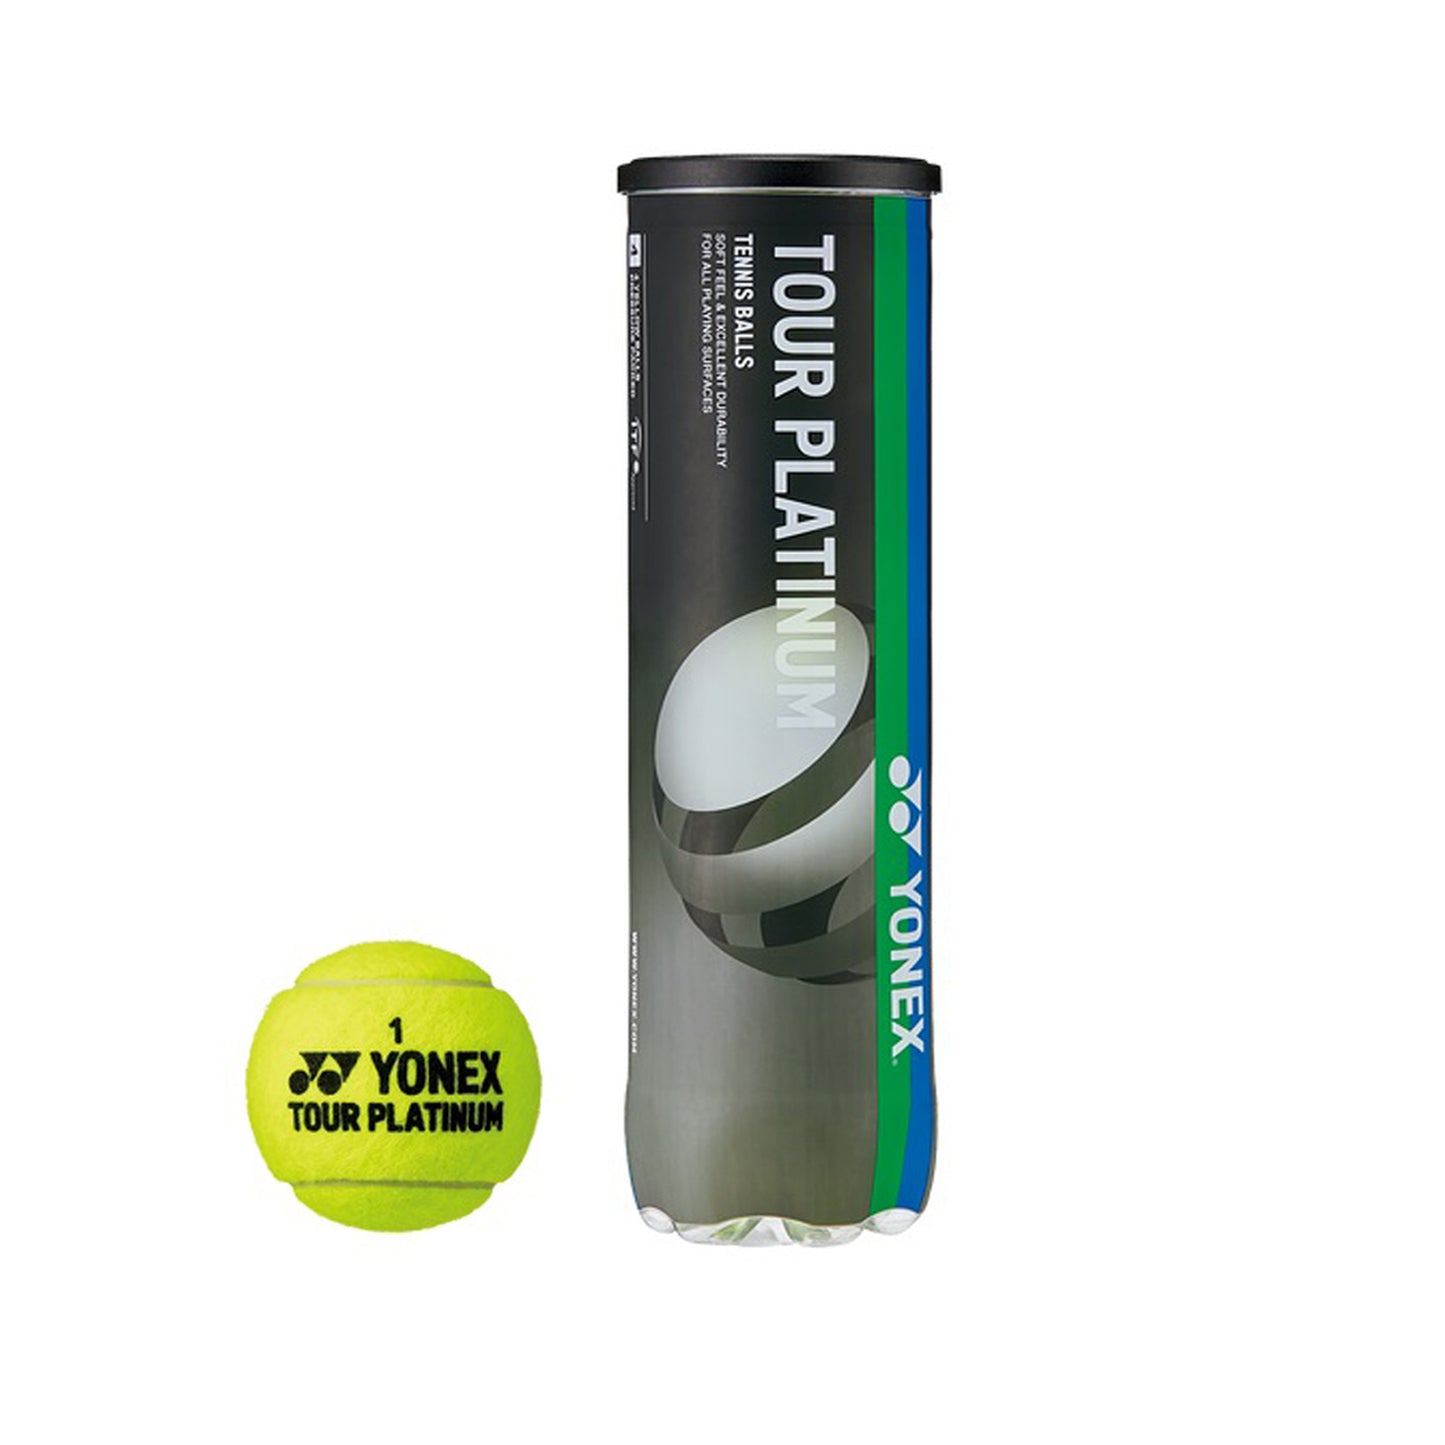 Yonex Tour Platinum (TB-TP4 EX) Tennis Balls, 1 Can - Yellow - Best Price online Prokicksports.com